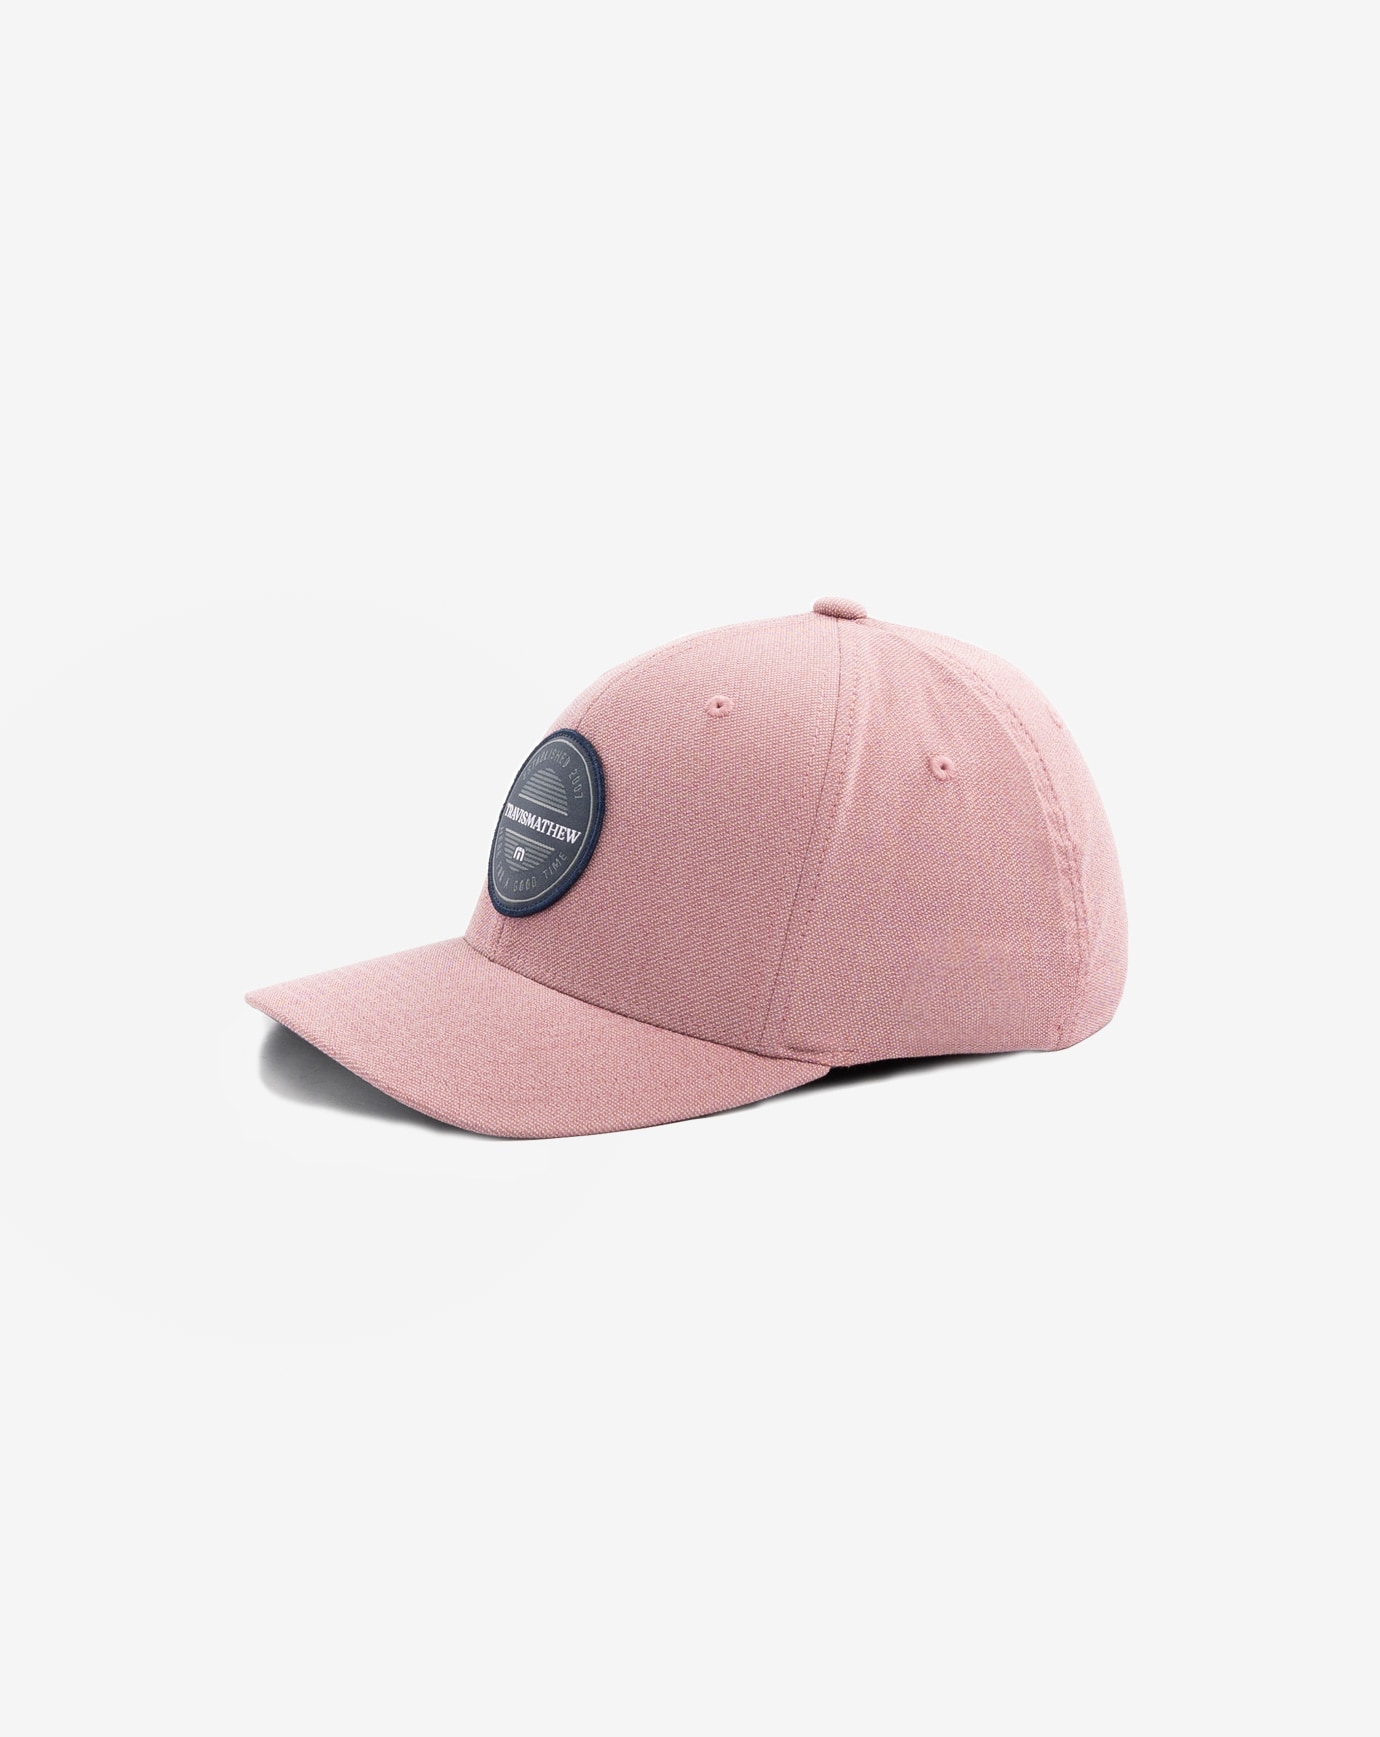 Pink Single Jack & Jones hat and cap discount 82% MEN FASHION Accessories 